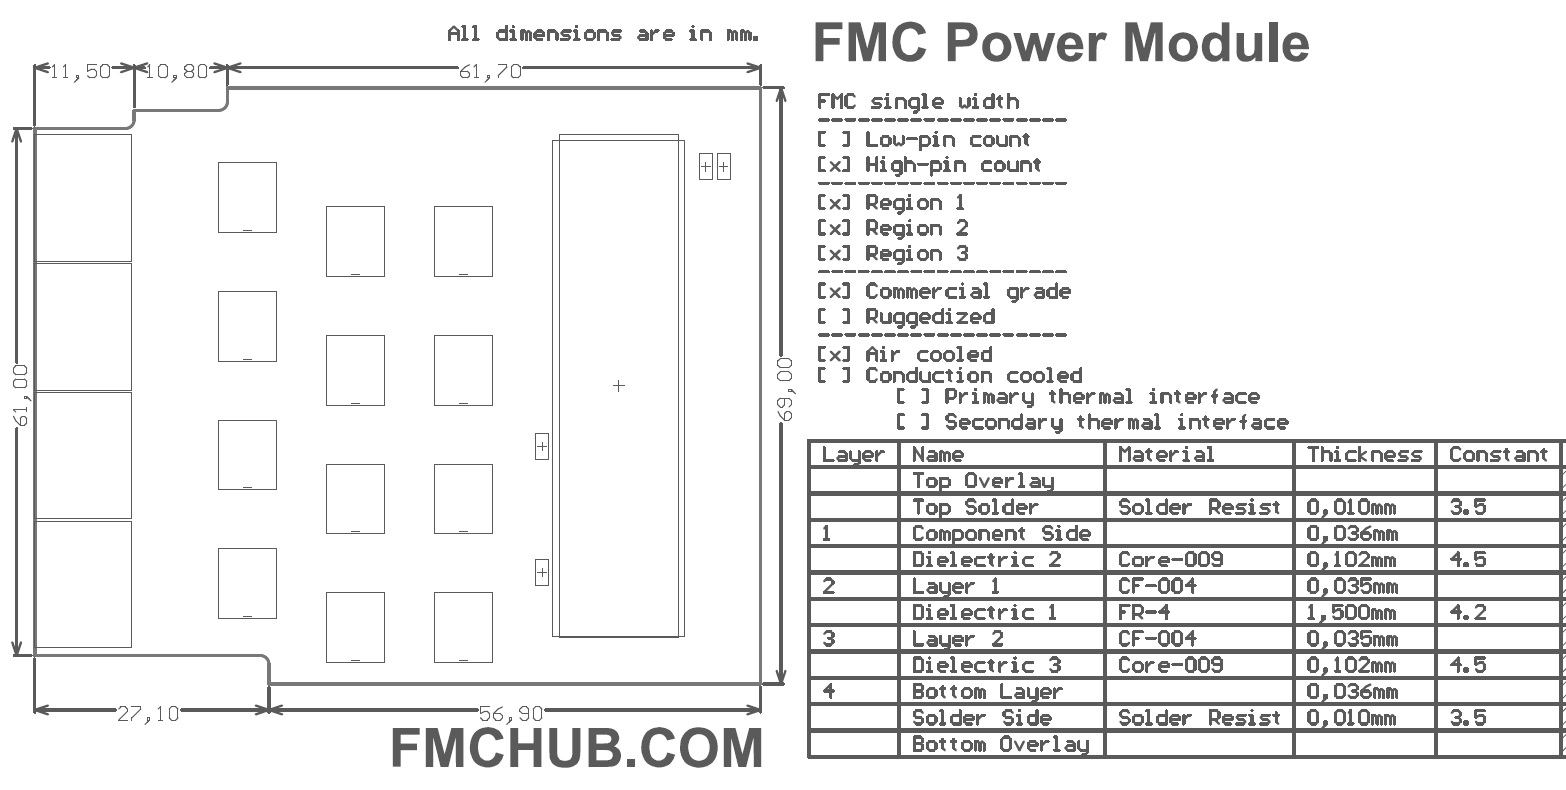 FMC Power Module mechanical data